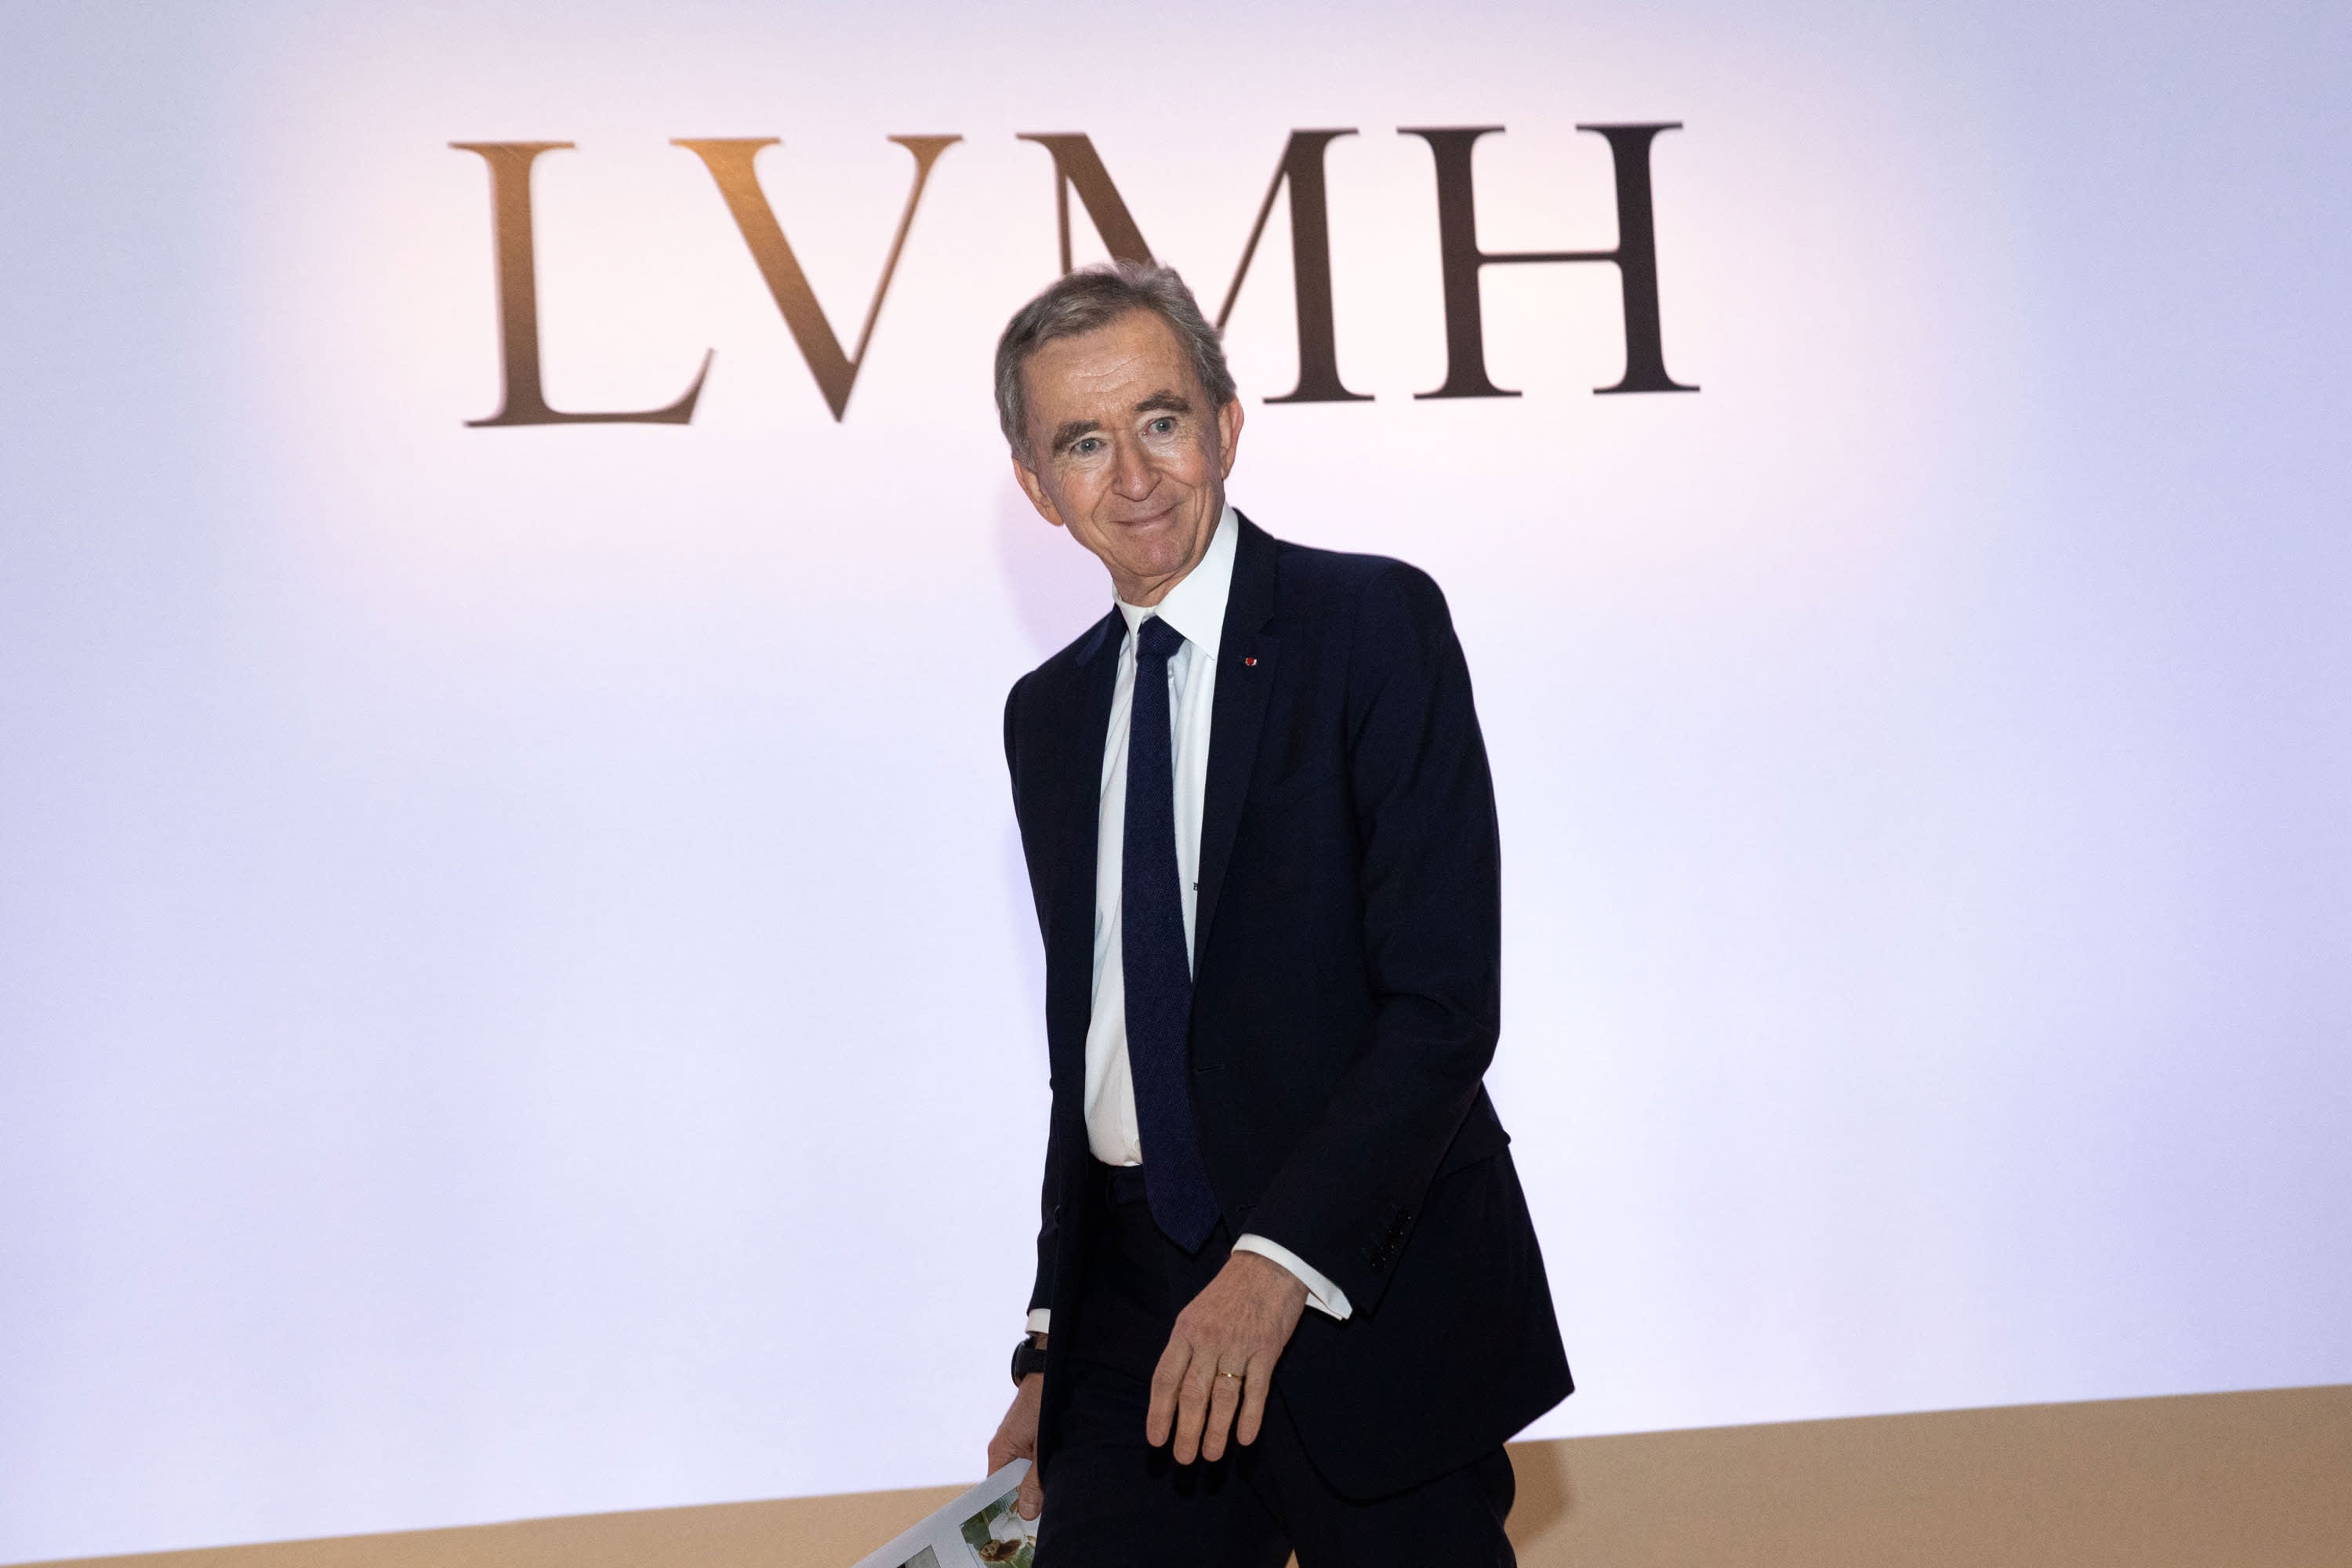 LVMH: the success story of Bernard Arnault, the richest man in the world